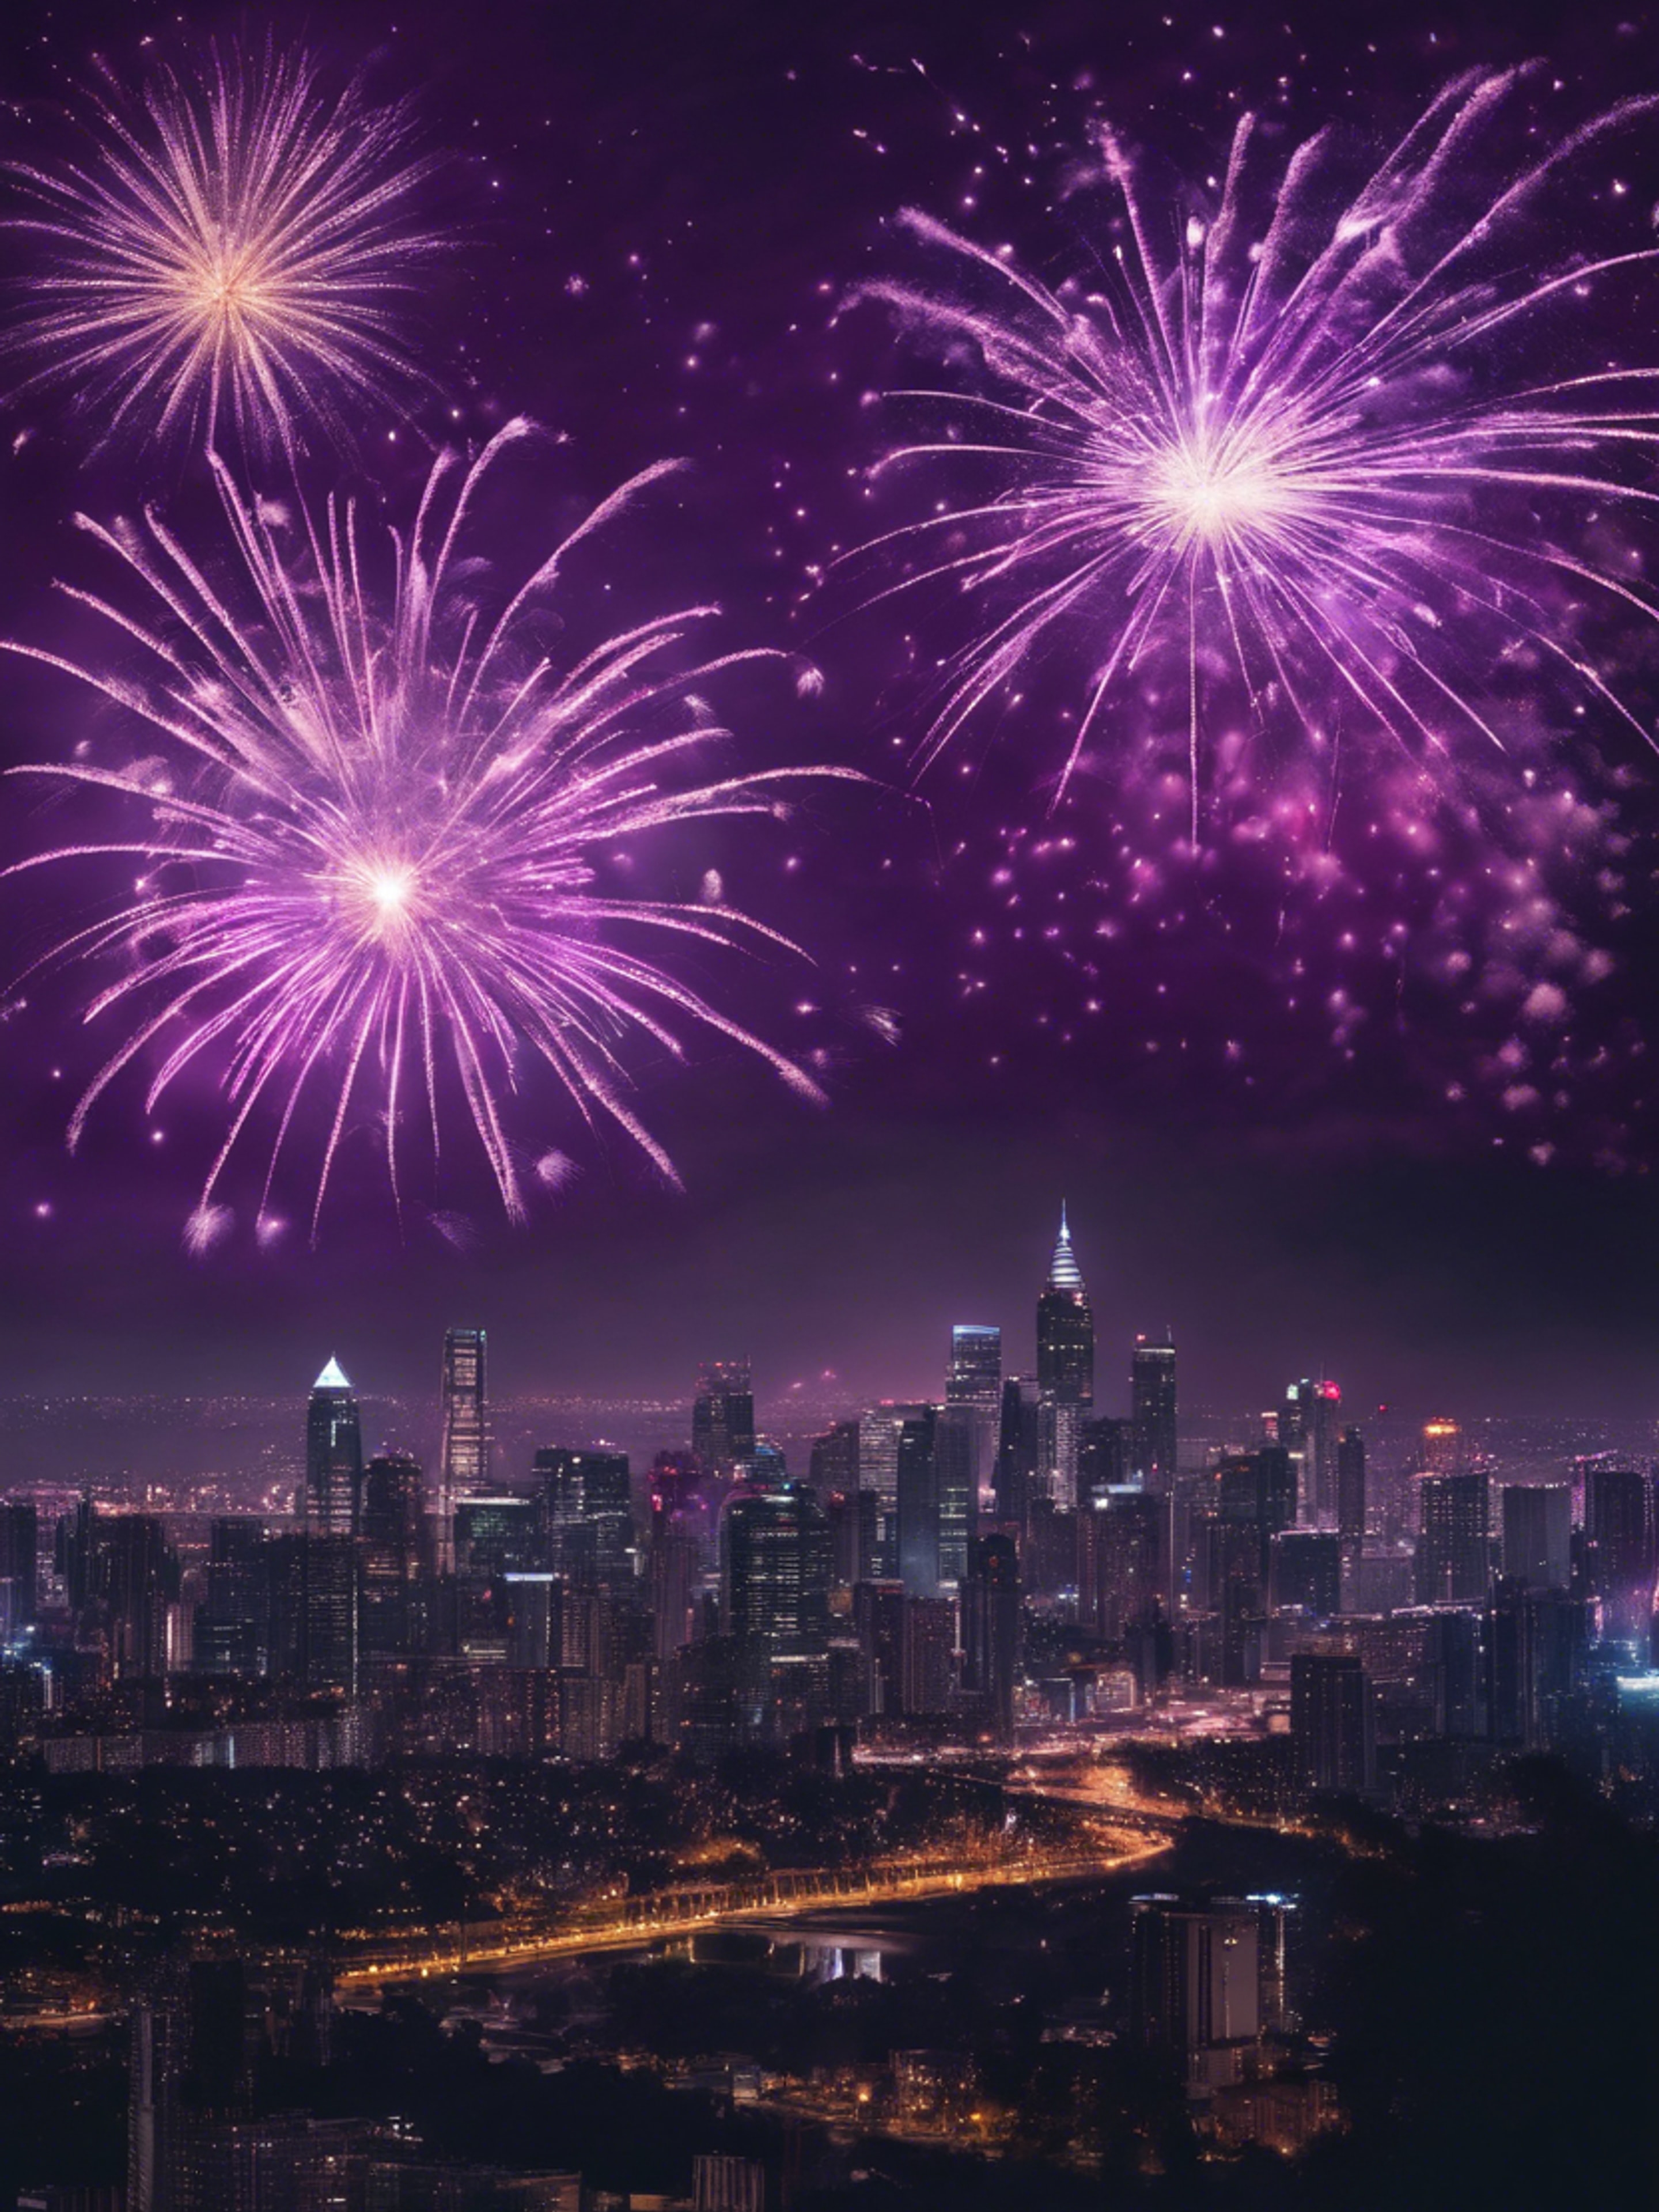 Dark purple fireworks illuminating the night's sky over an illuminated city skyline. 벽지[a2398988017f44d3a04c]